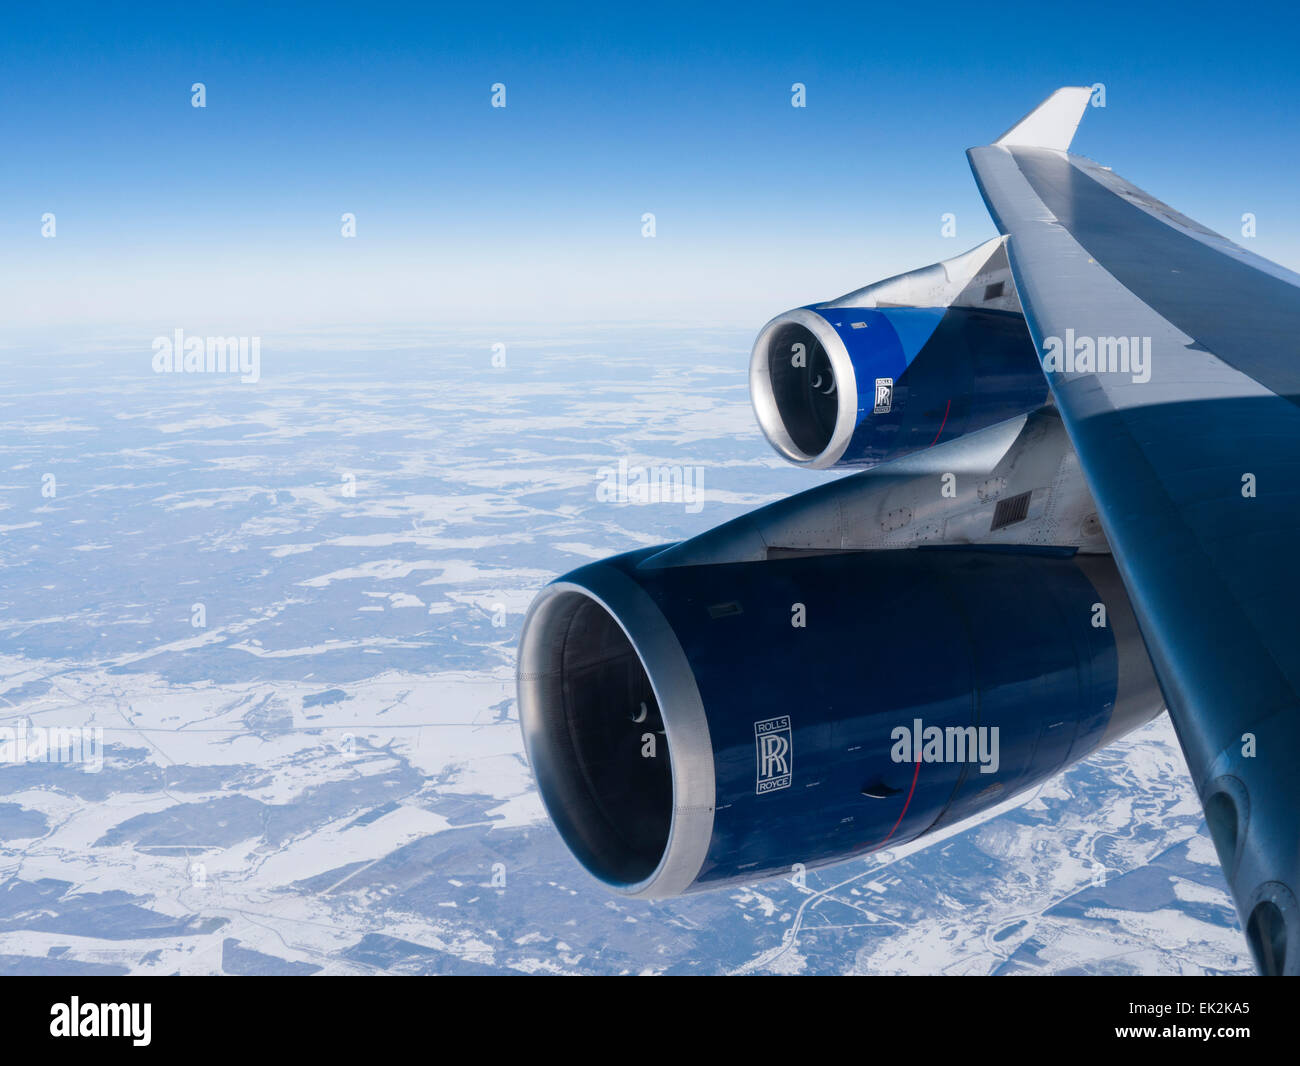 Rolls Royce jet engine on a BA passenger plane Stock Photo - Alamy